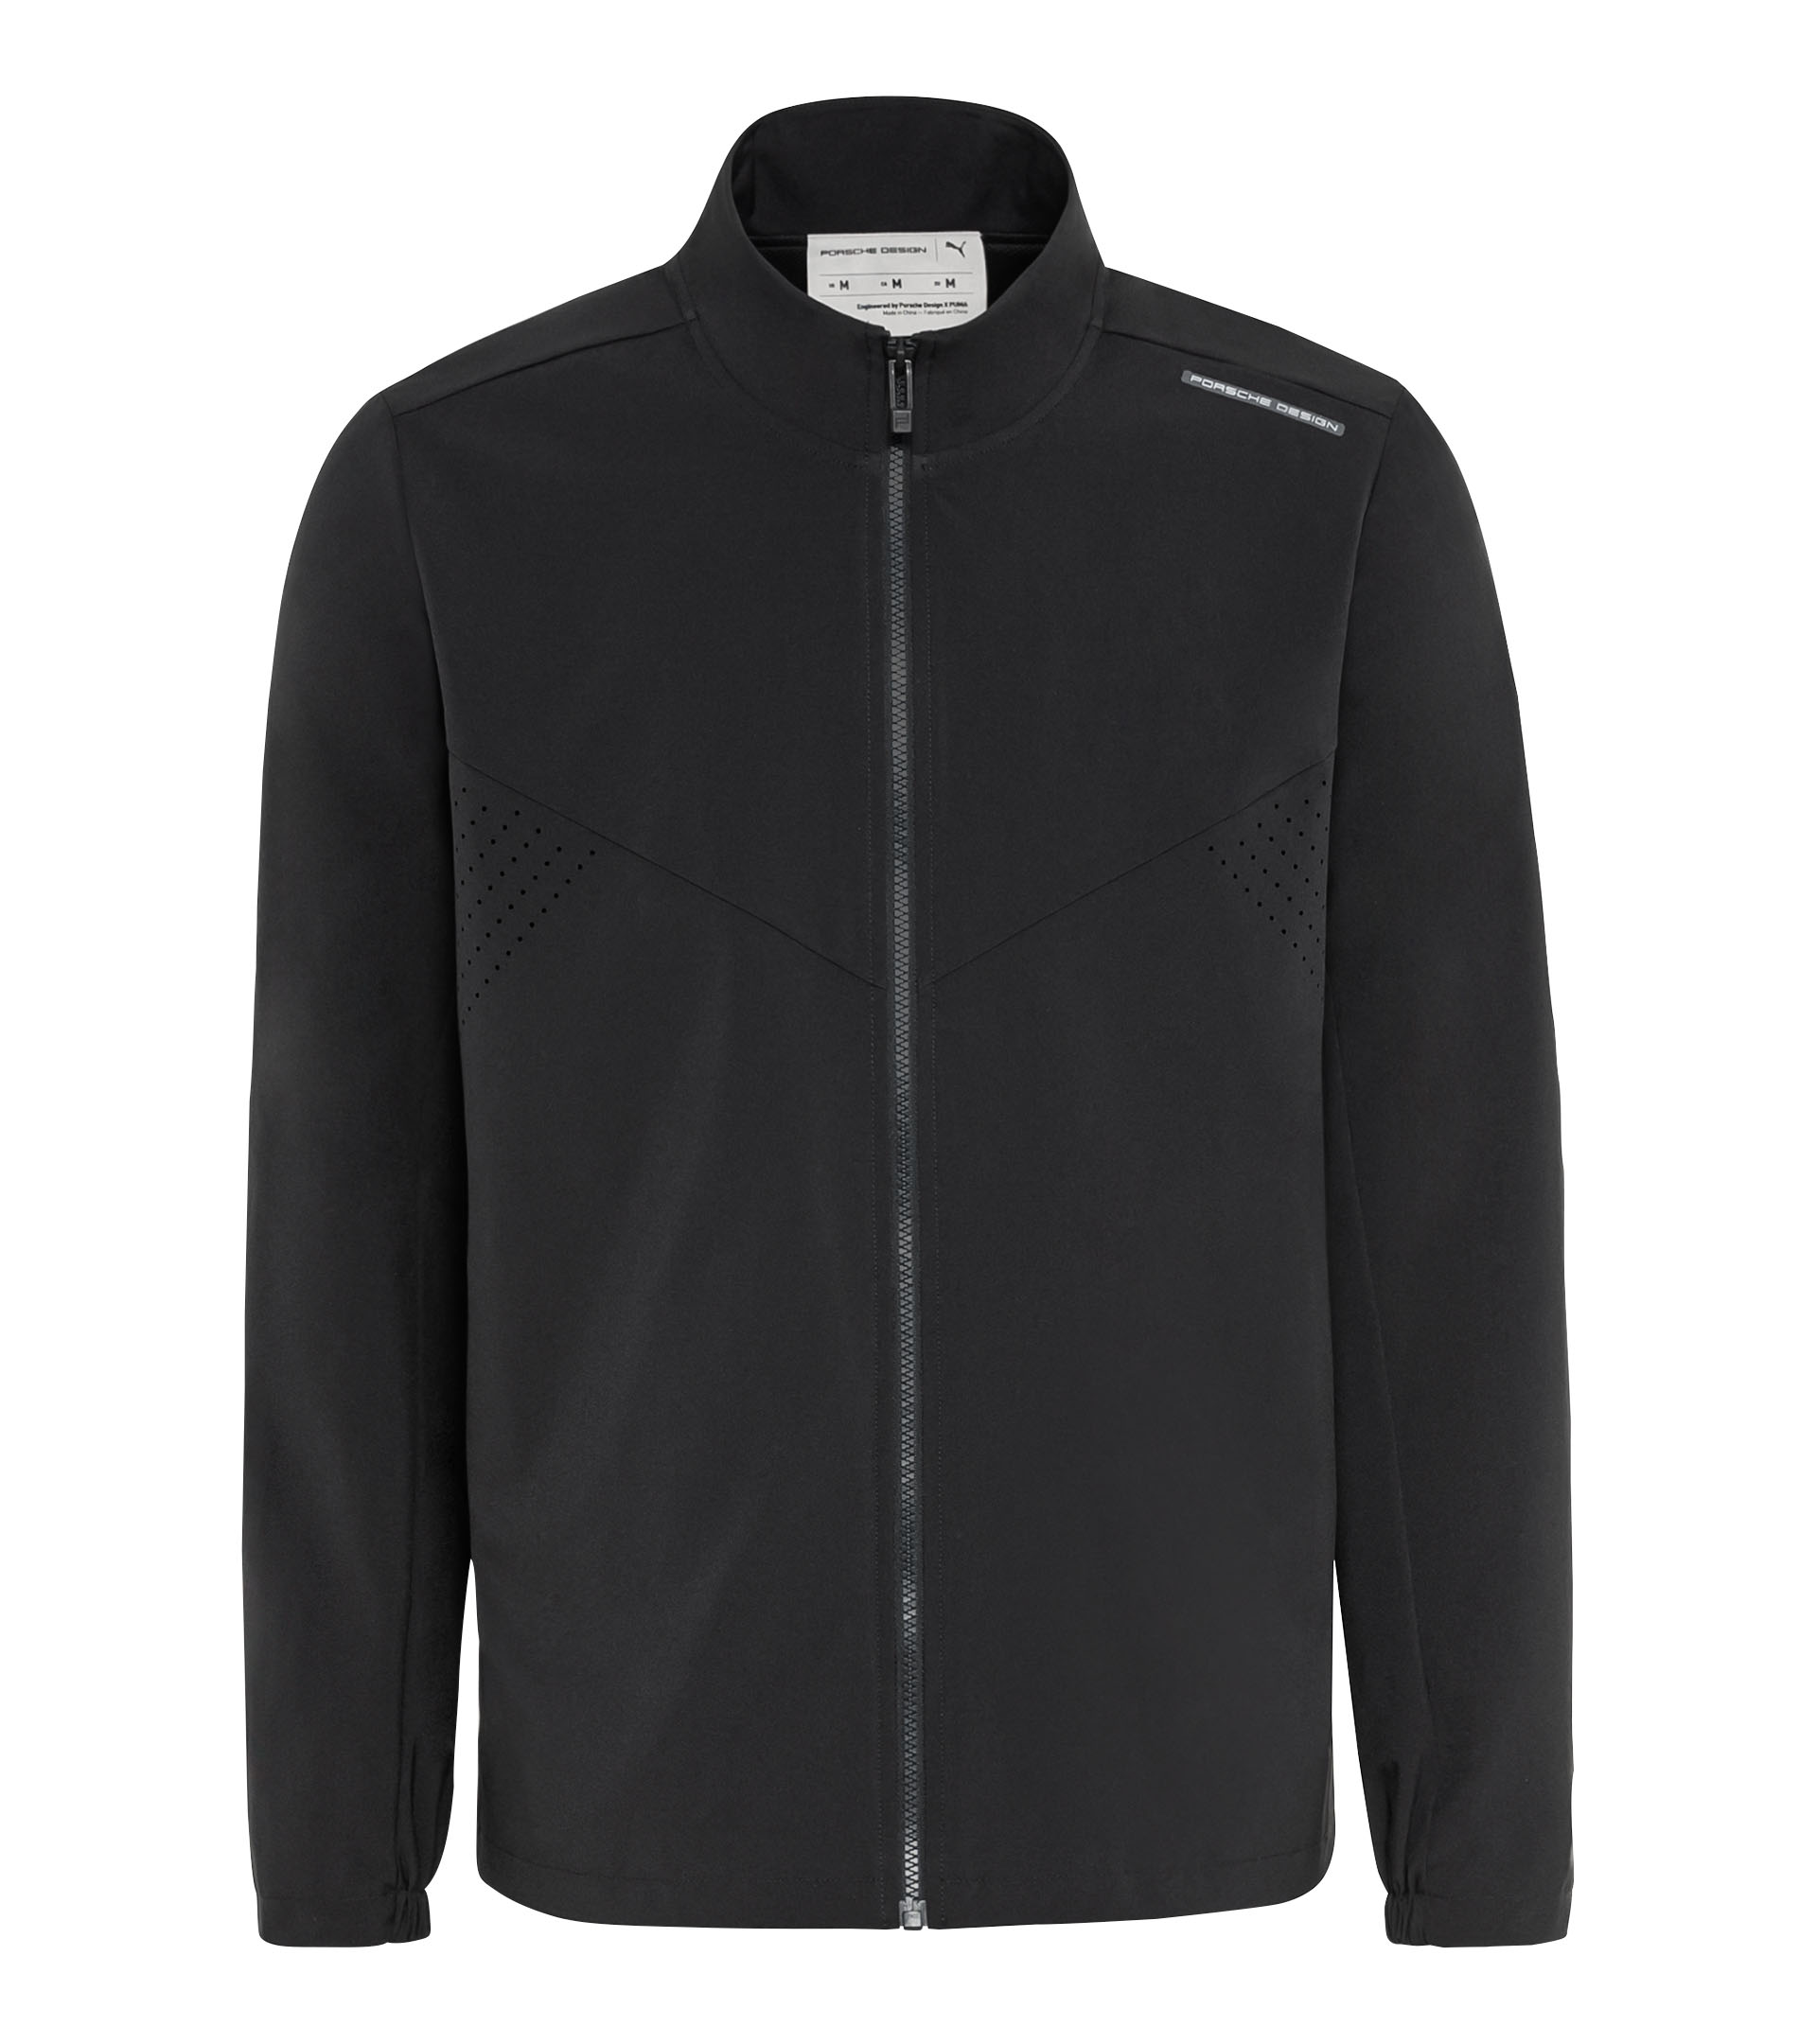 Woven Tech Jacket - Luxury Functional Jackets for Men | Porsche Design ...